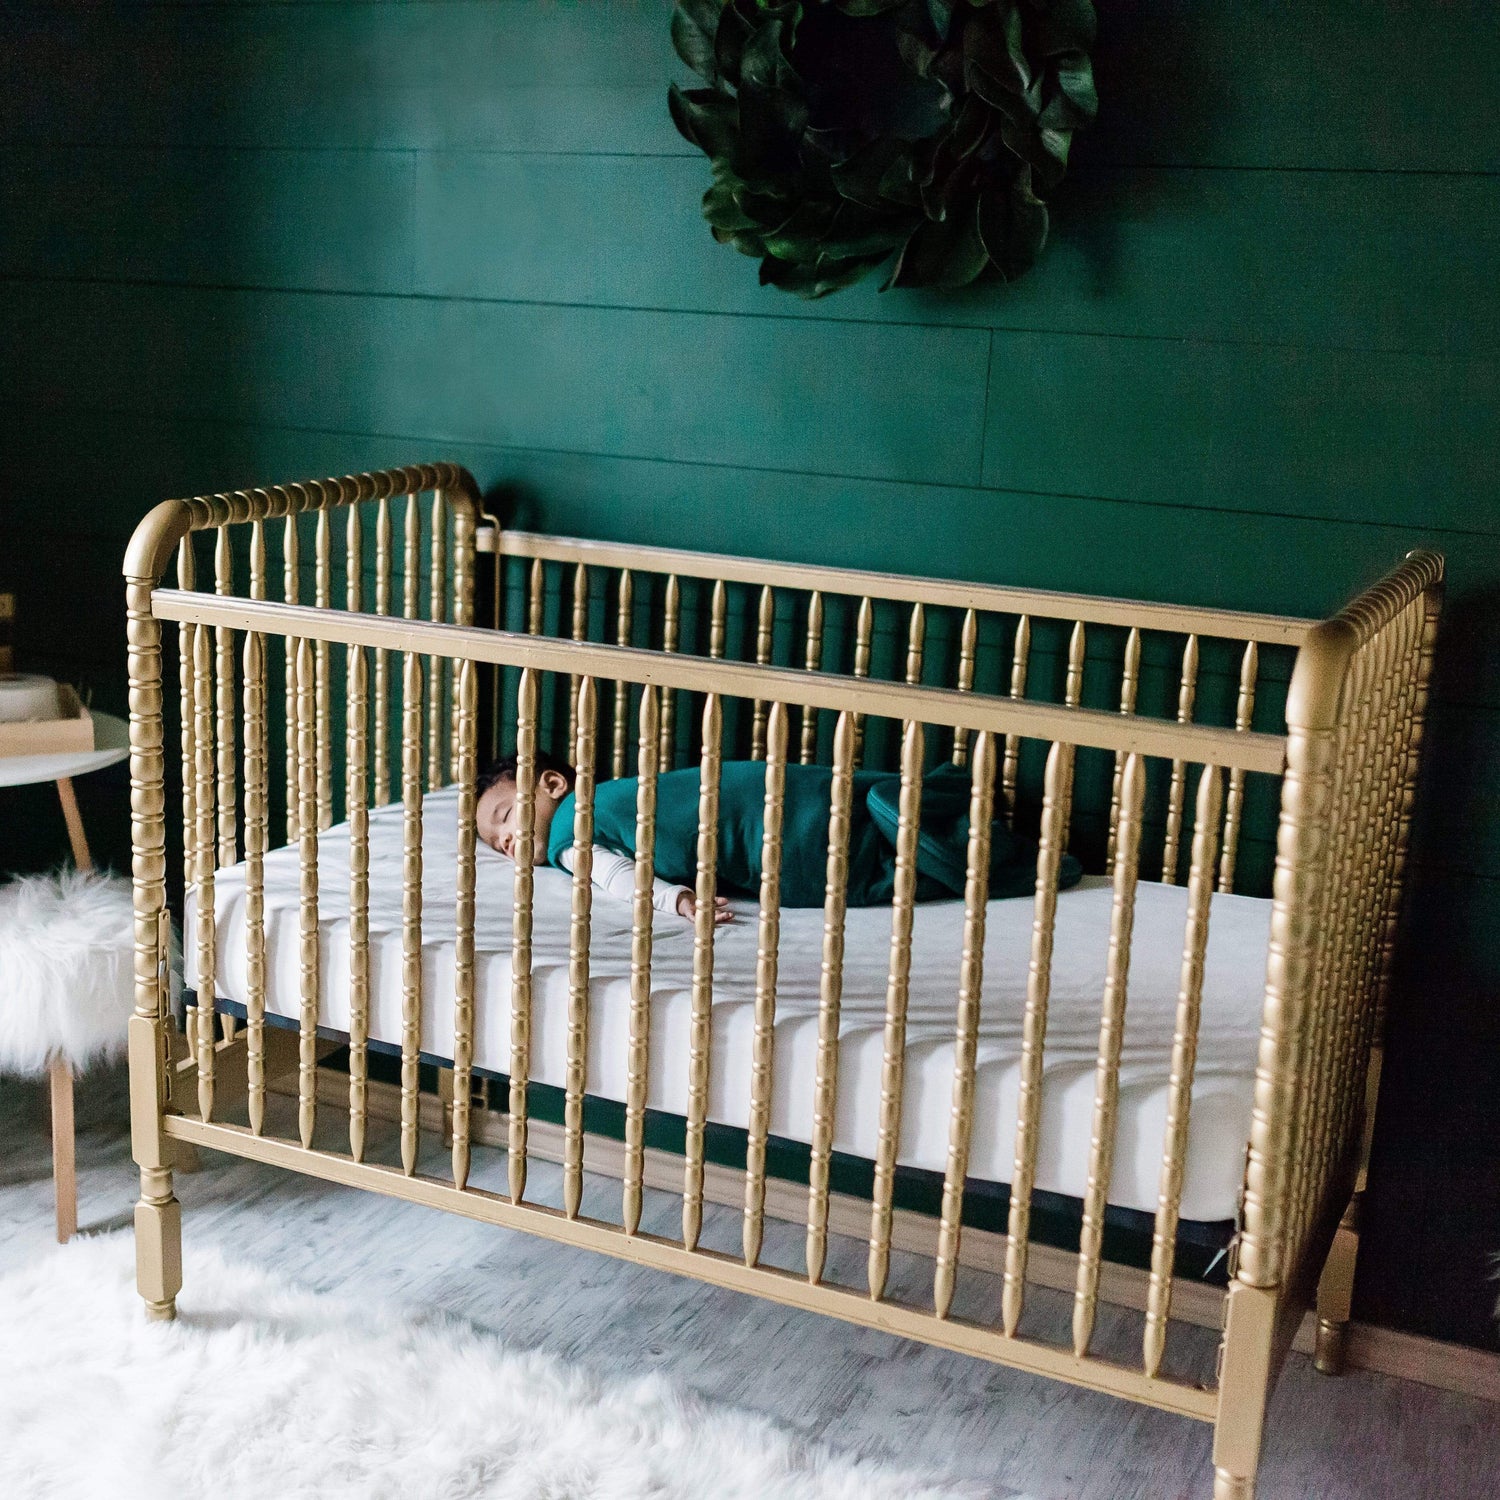 Sleeping Baby, Crib Accessories, Safe Sleep Environment